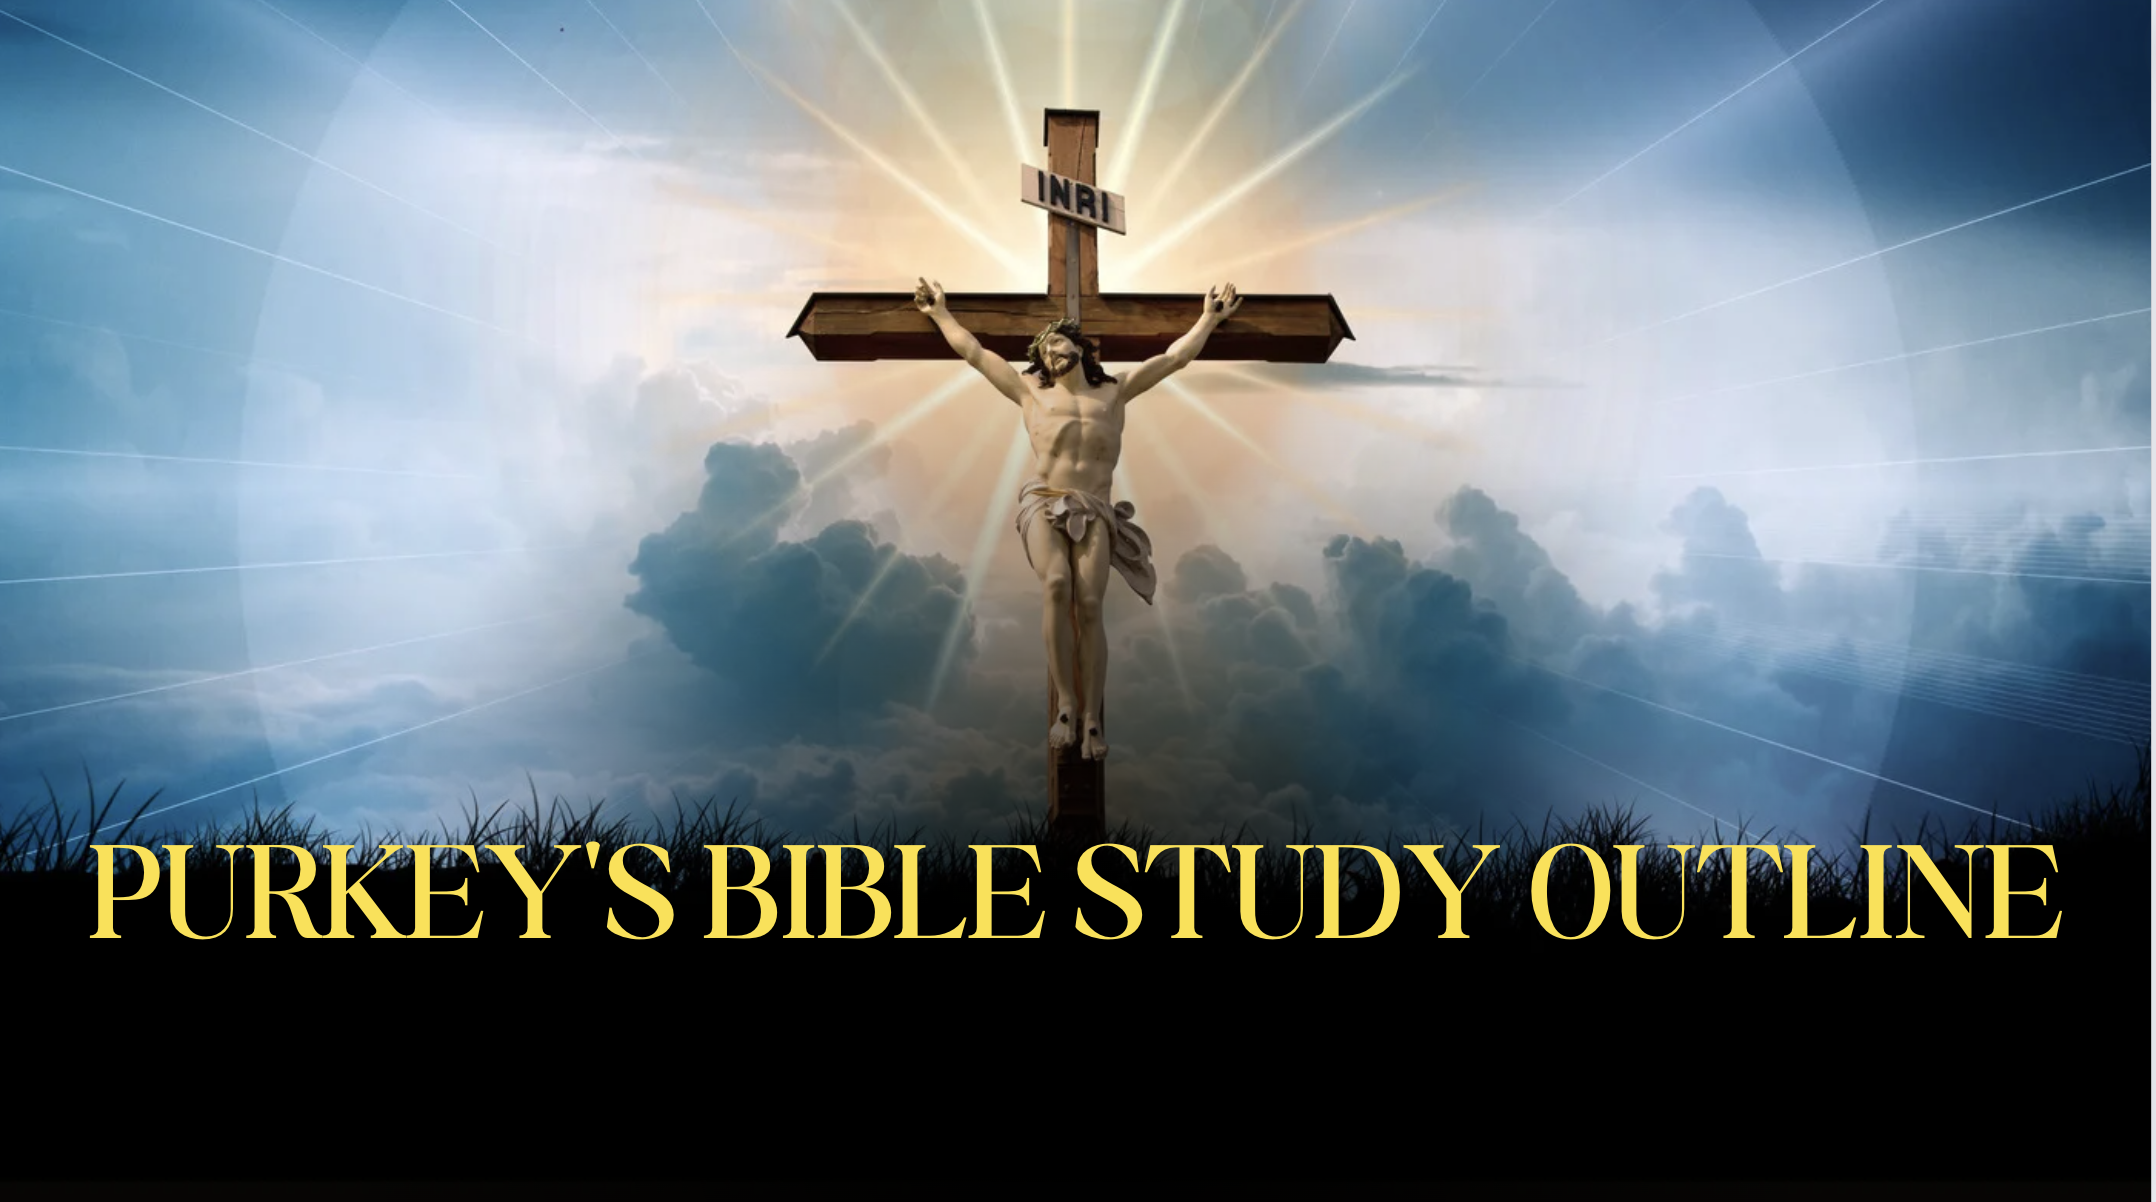 Purkey's Bible Study Outline